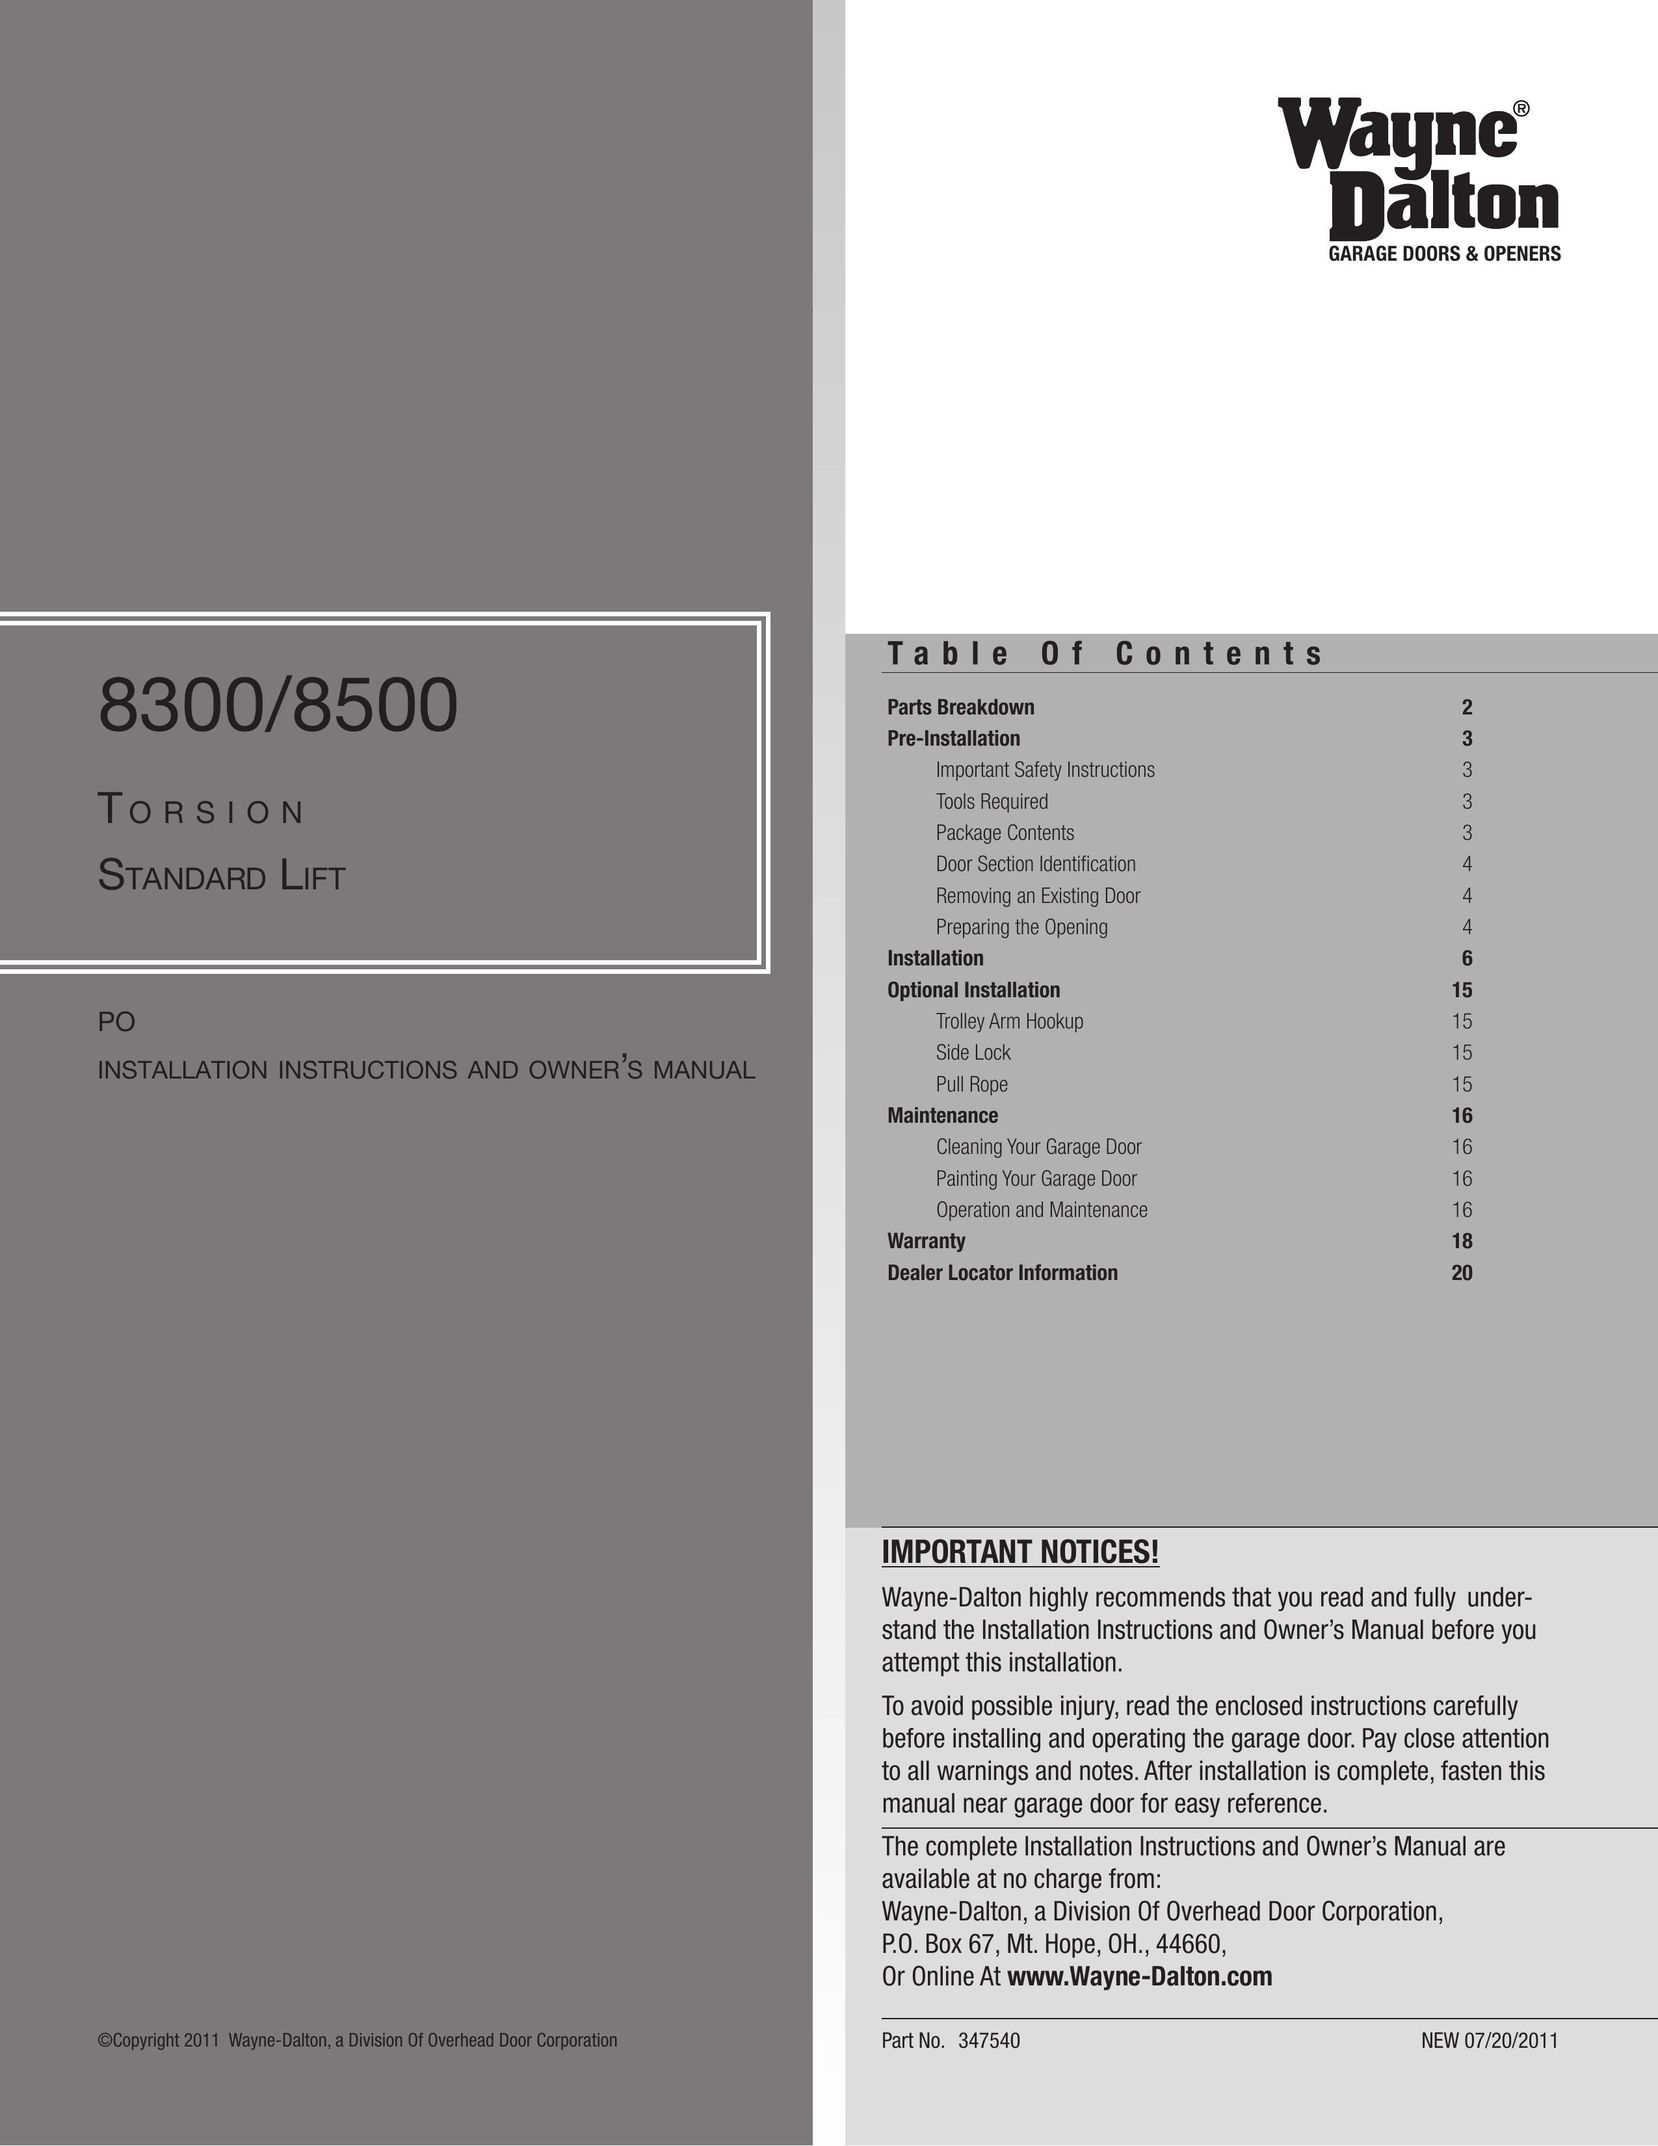 Wayne-Dalton 8300/8500 CRT Television User Manual